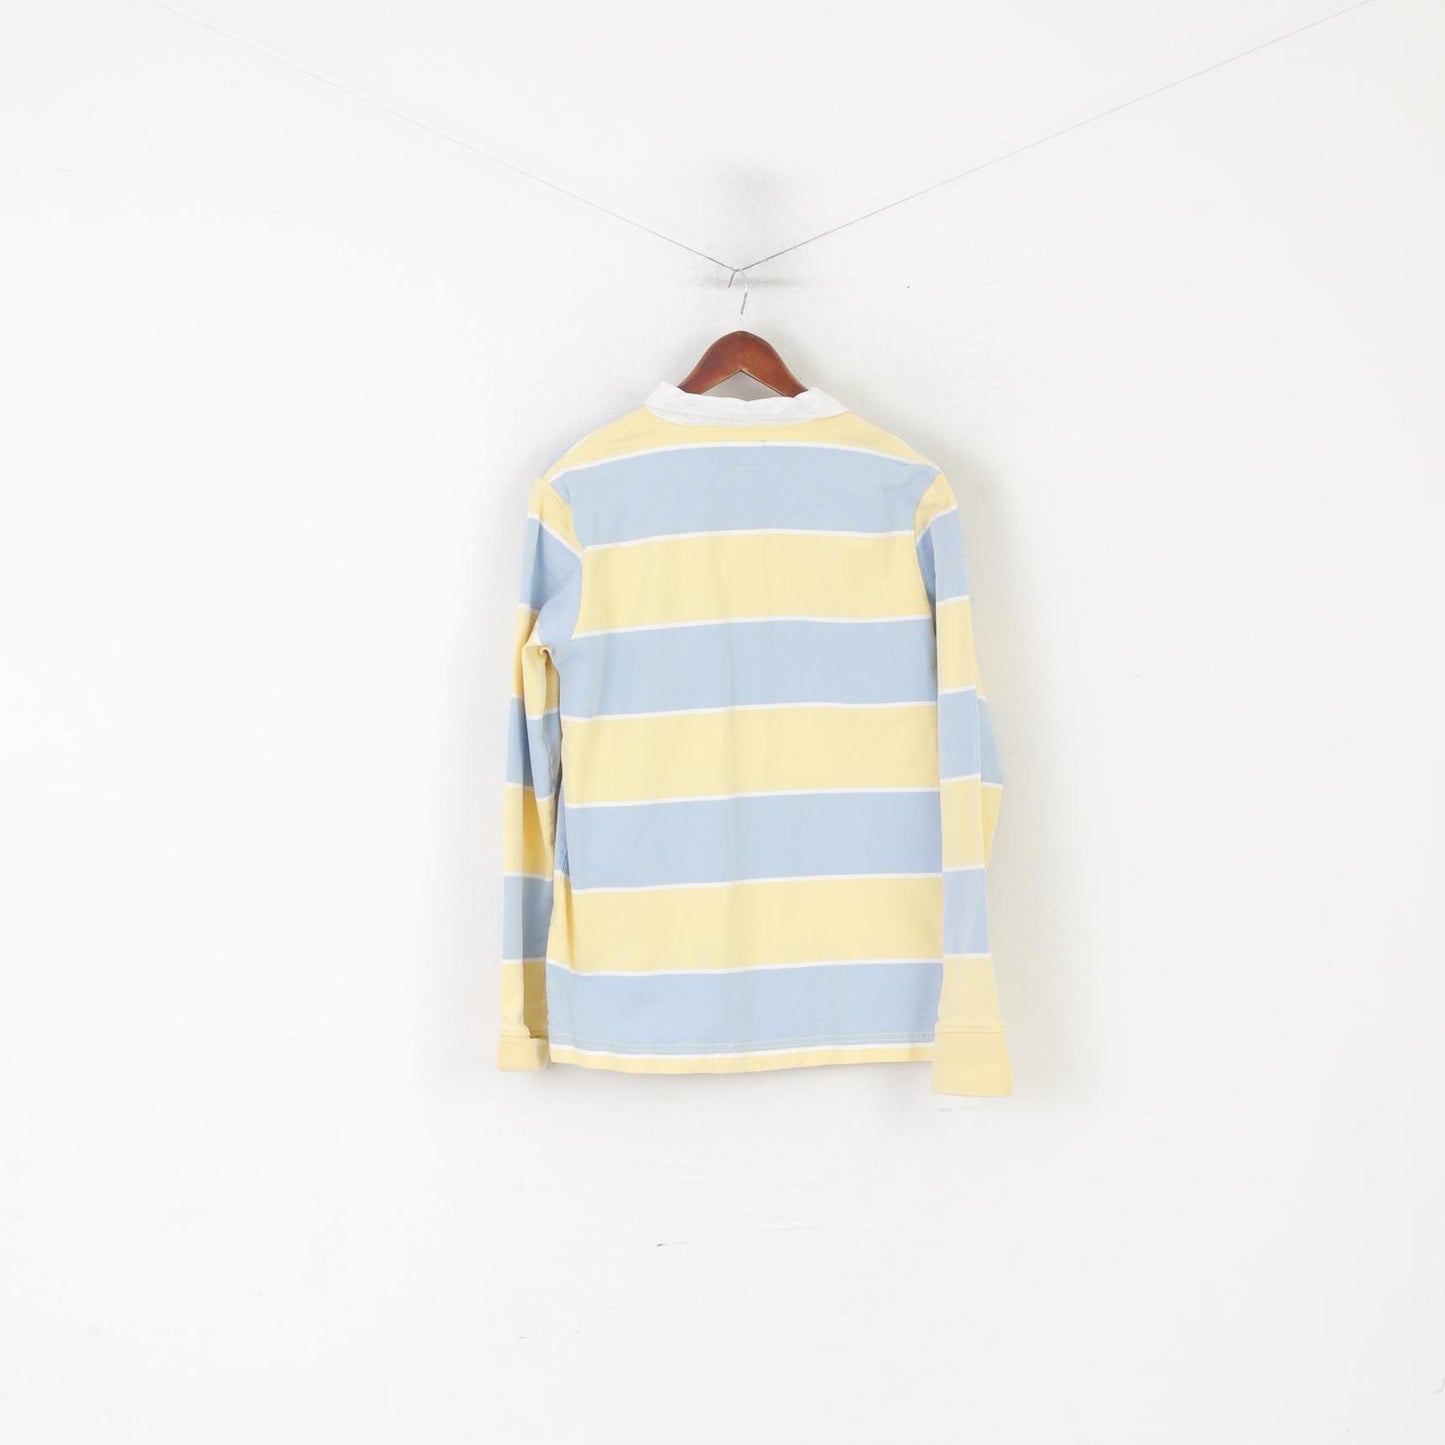 Rampant Sporting Men L (M) Polo Shirt Yellow Blue Striped Cotton Long Sleeve Top